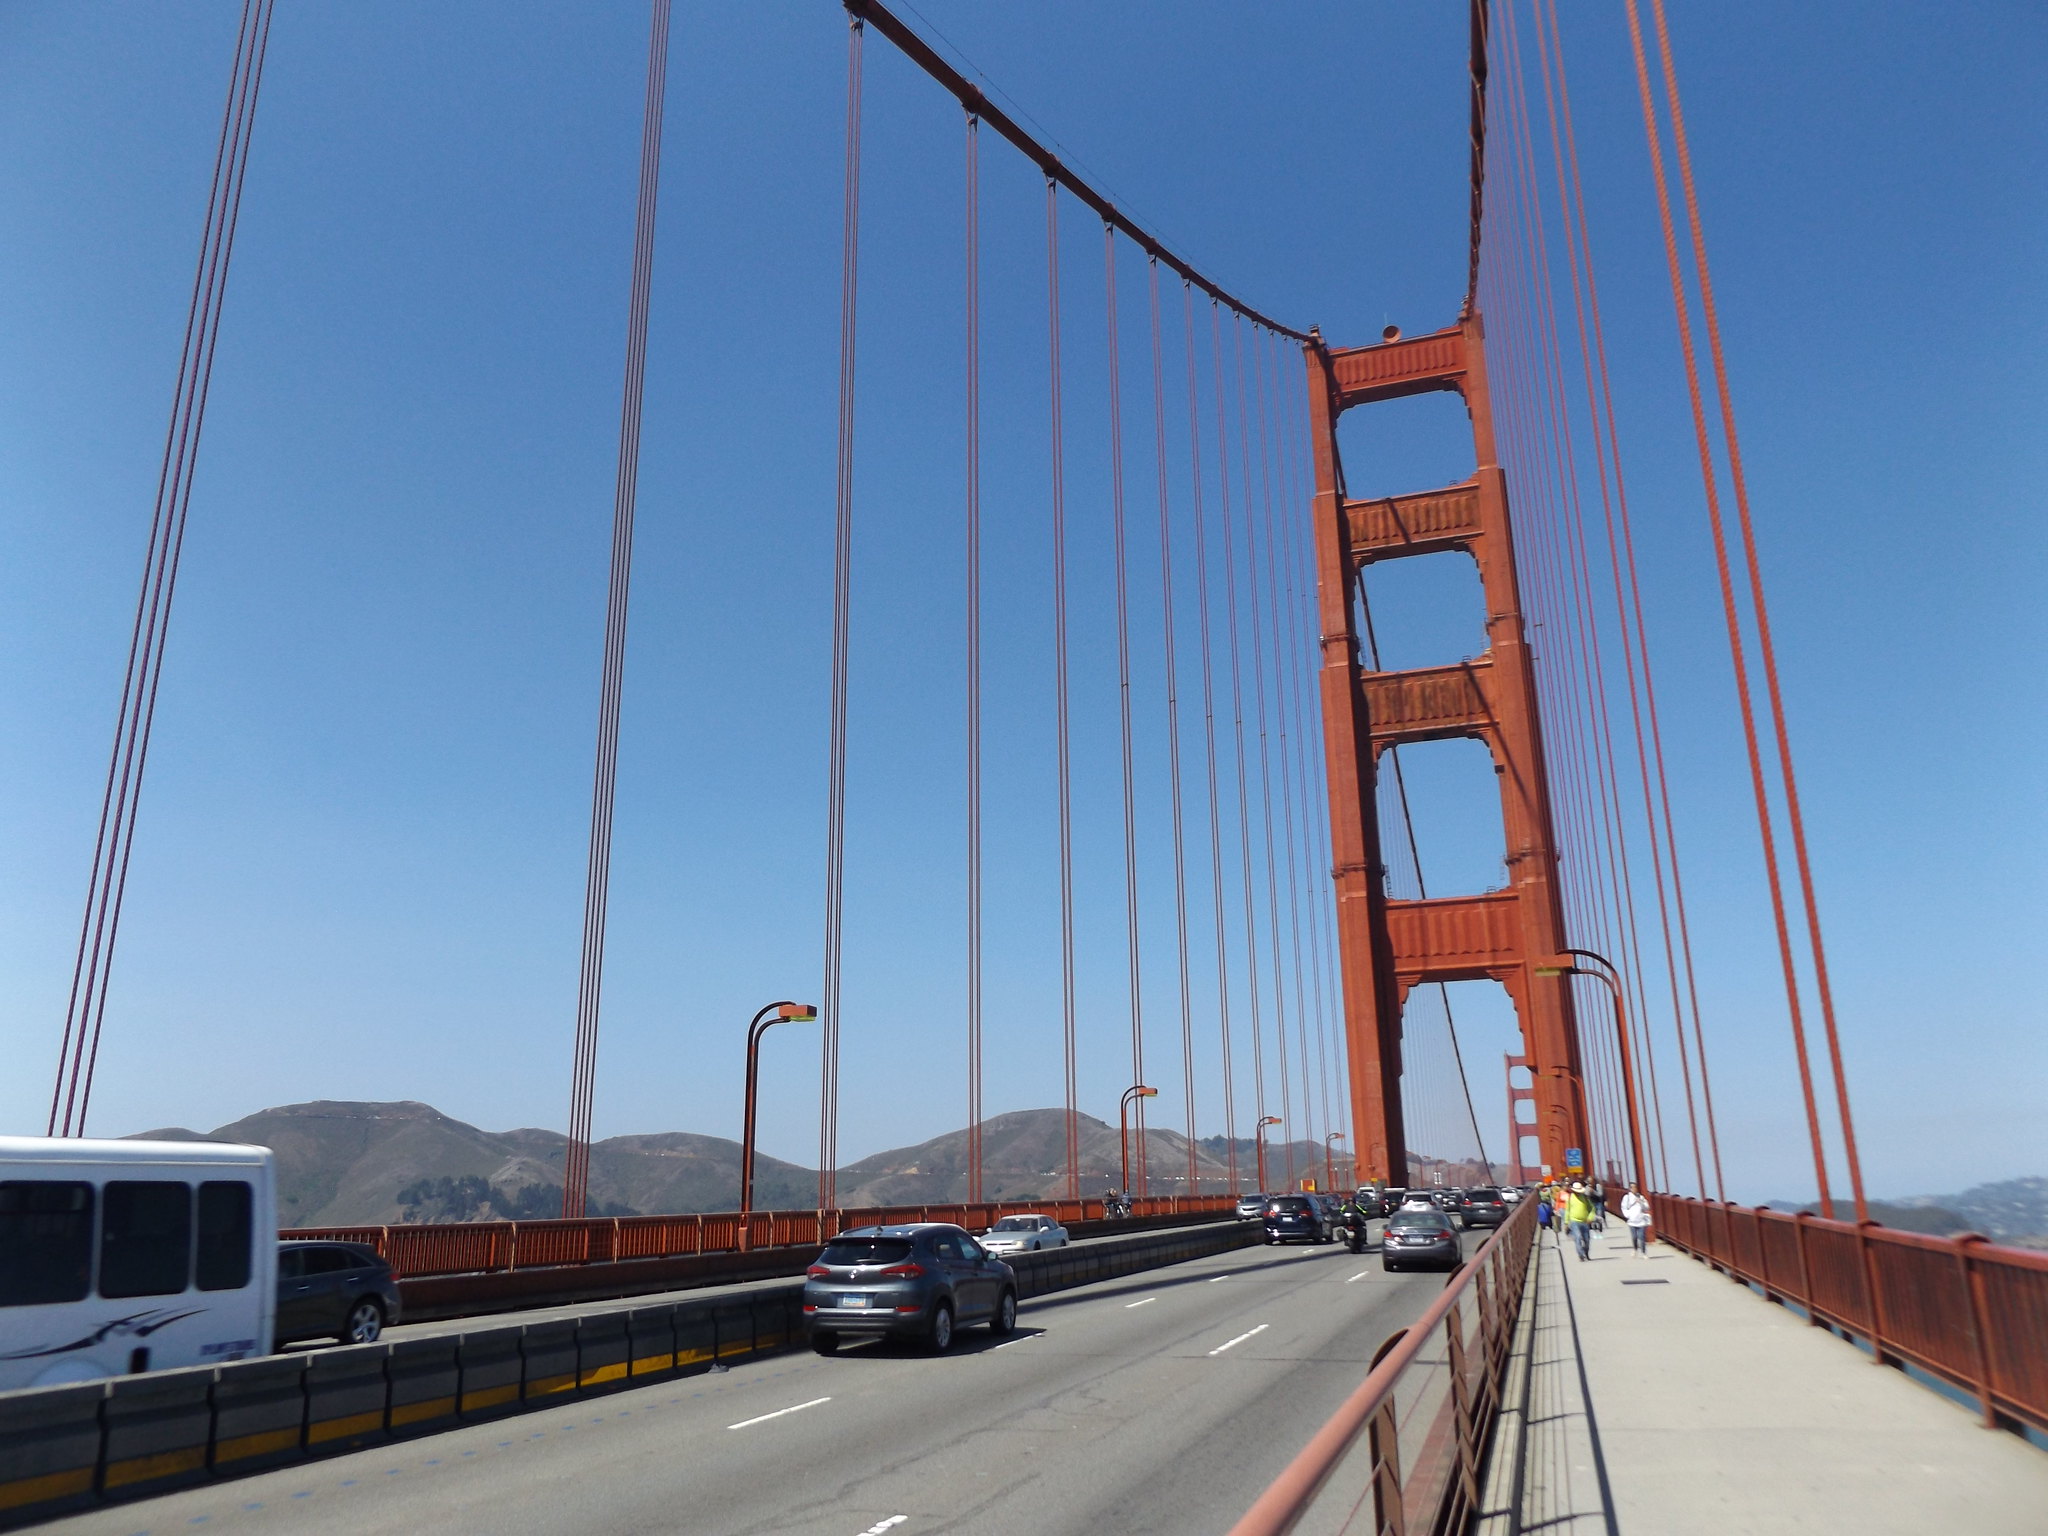 South Tower of Golden Gate Bridge, San Francisco, California, USA, 9 September 2018